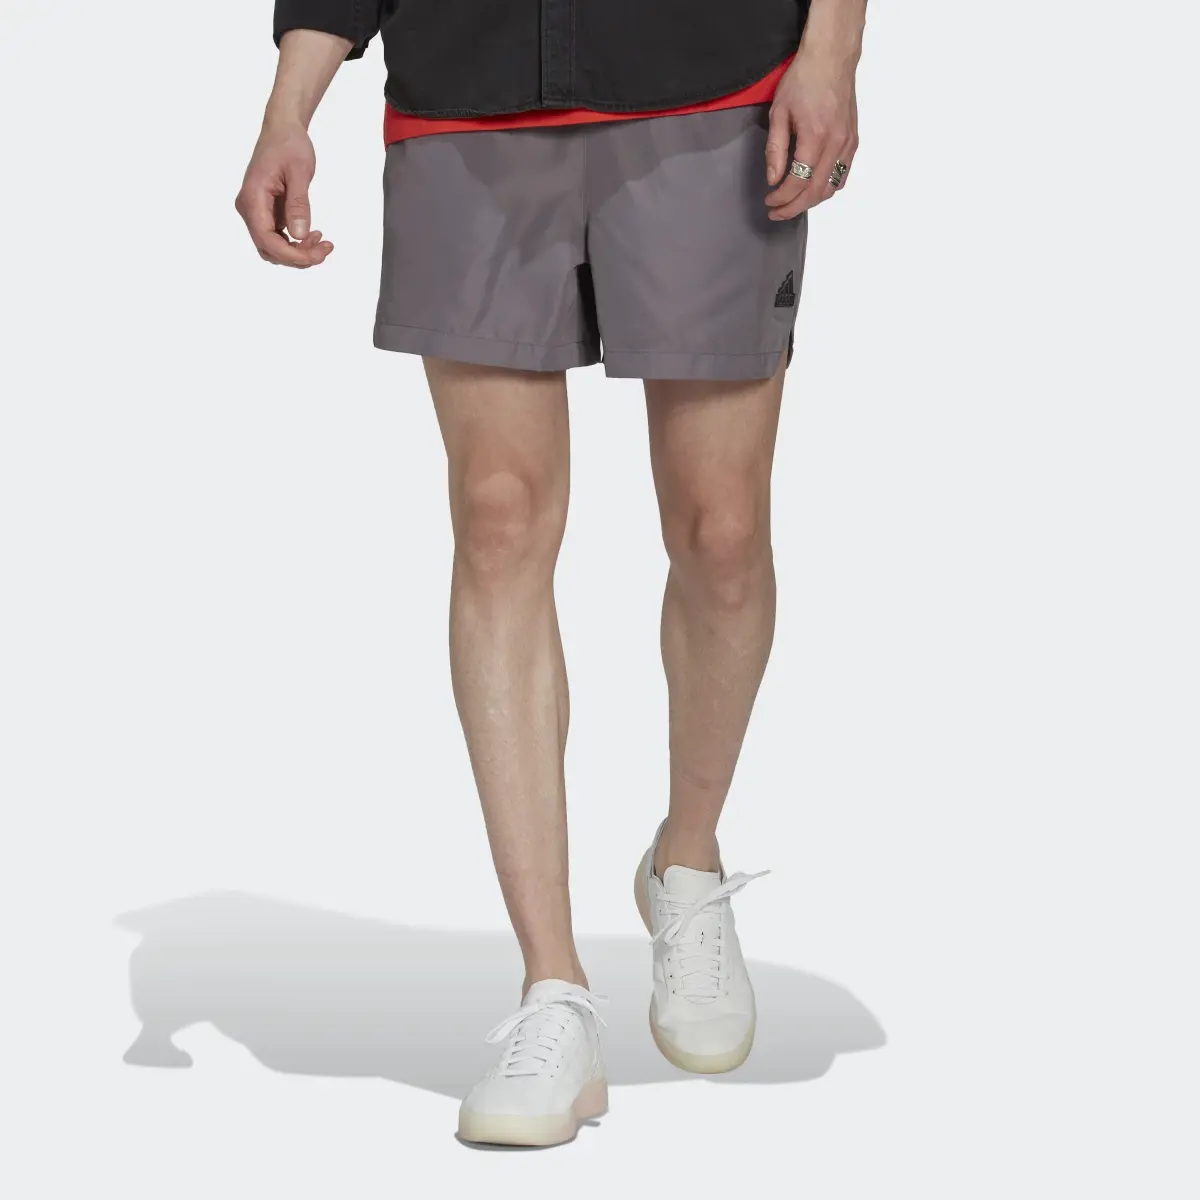 Adidas Tech Shorts. 1